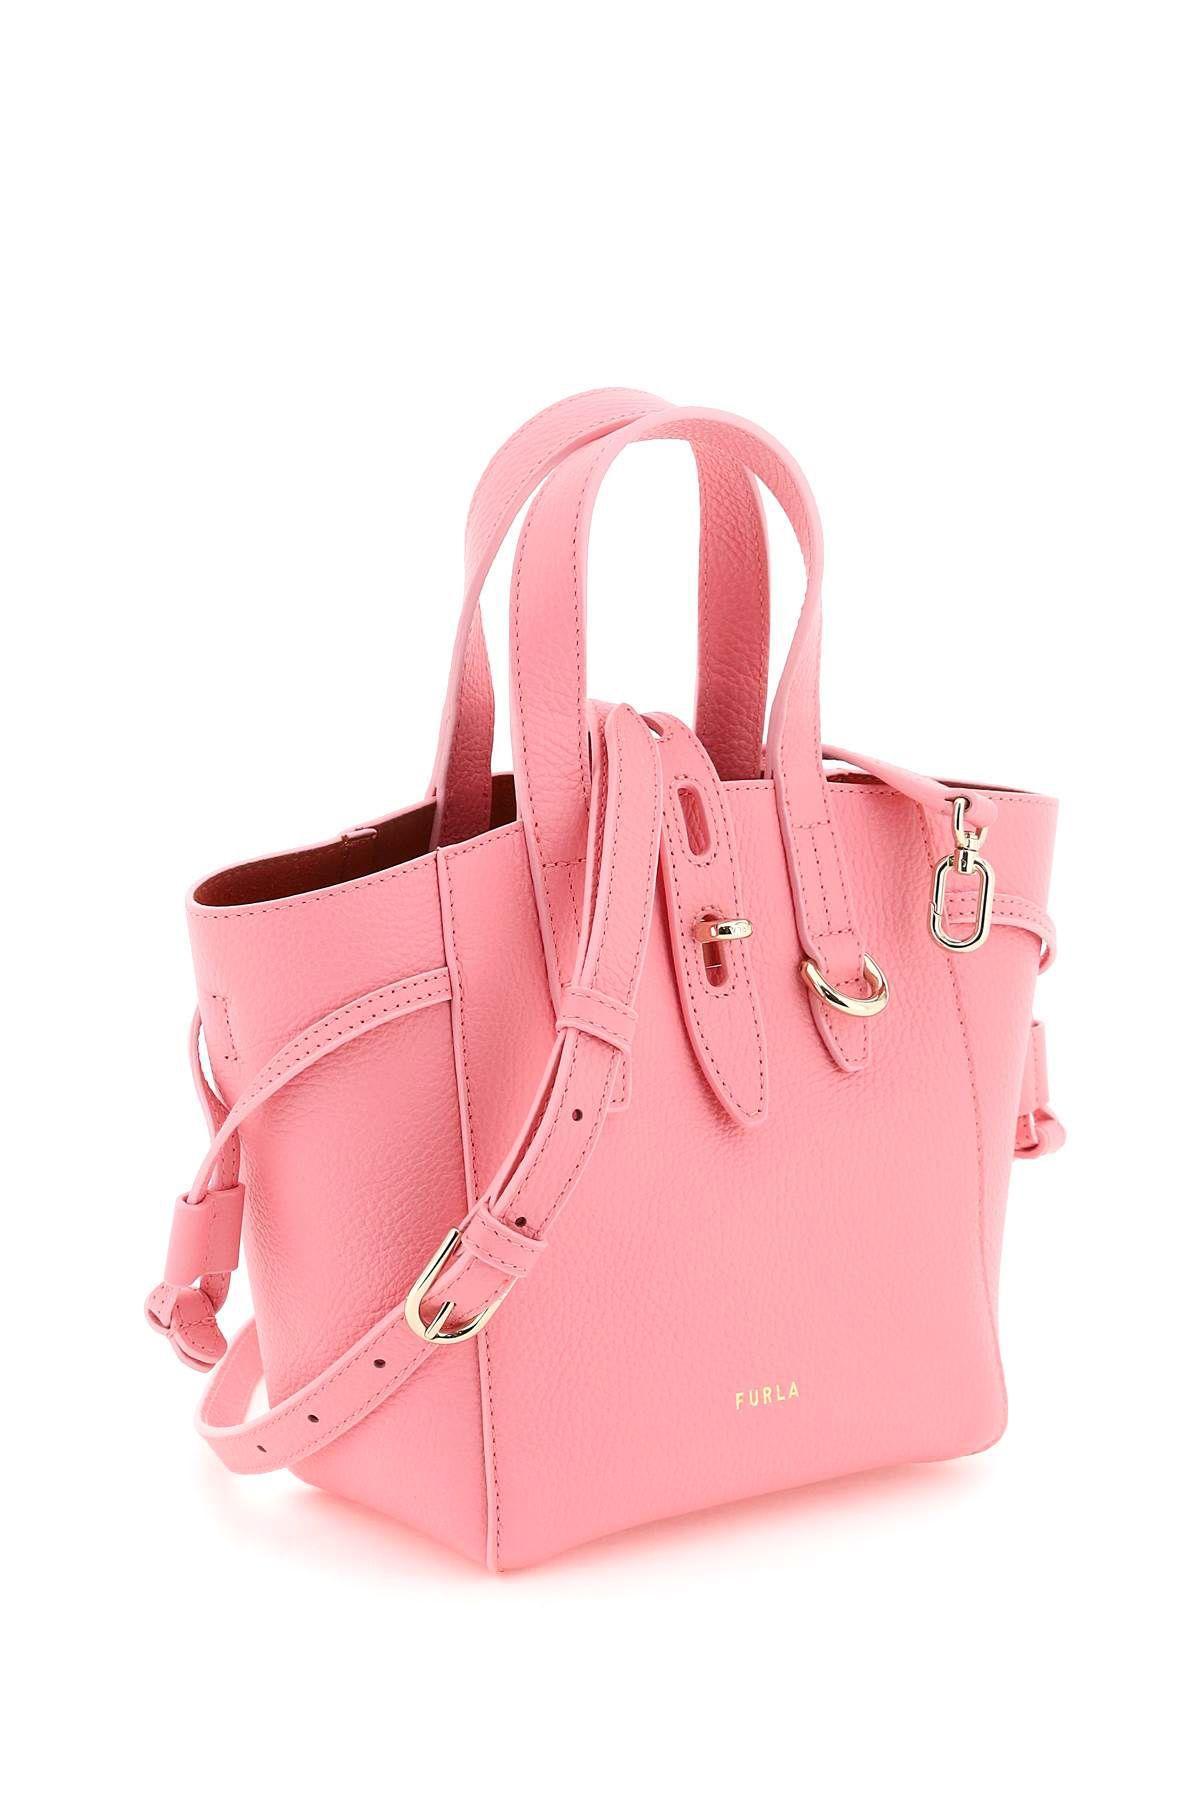 Furla Leather Mini Net Tote Bag in Pink | Lyst